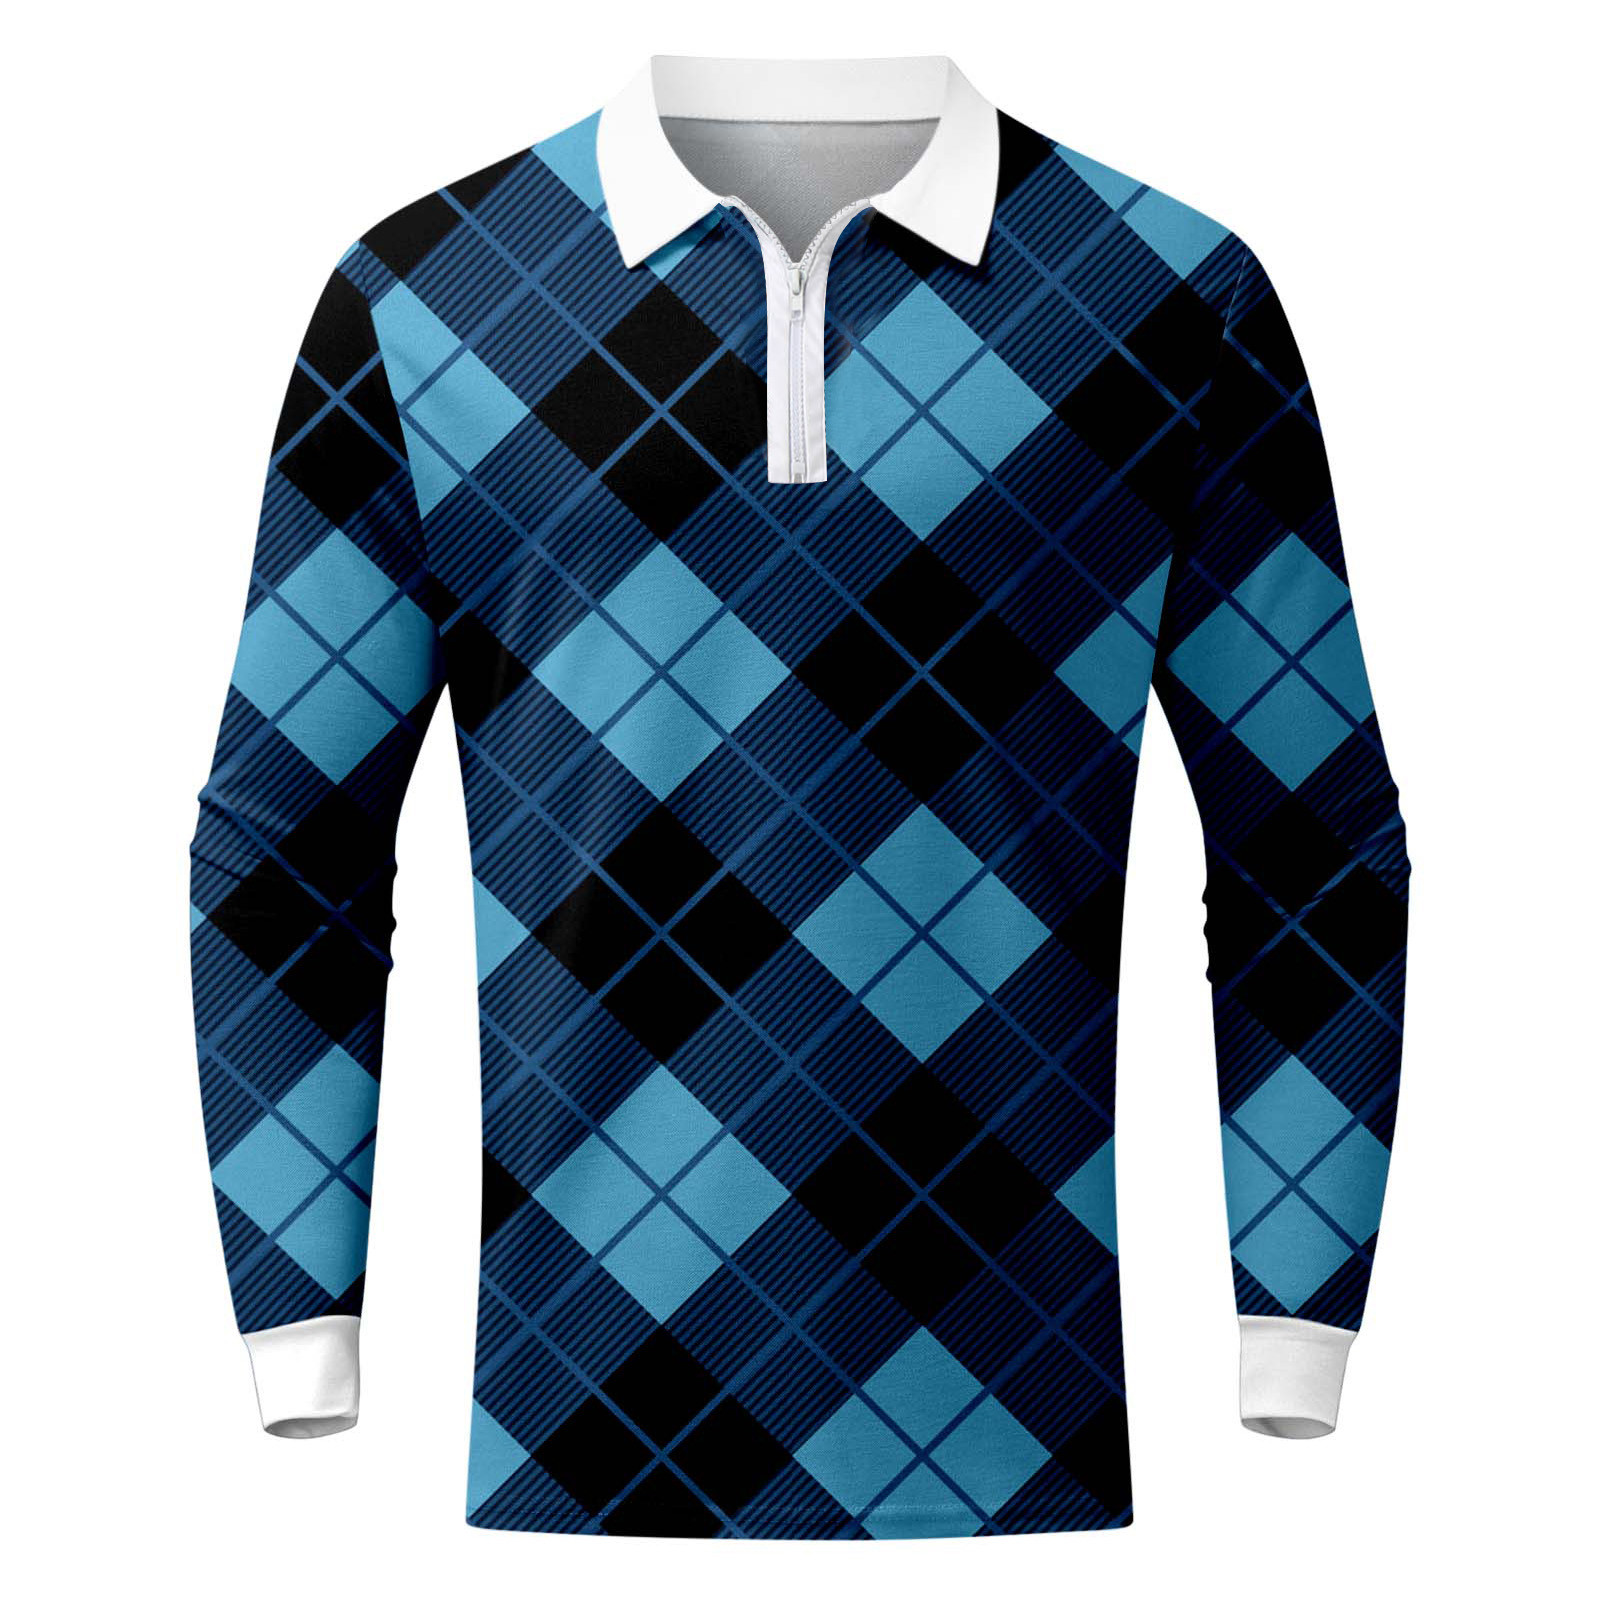 WUWUQF Men's Long Sleeve Polo Shirts Male Lozenge Print T-Shirt Turn ...